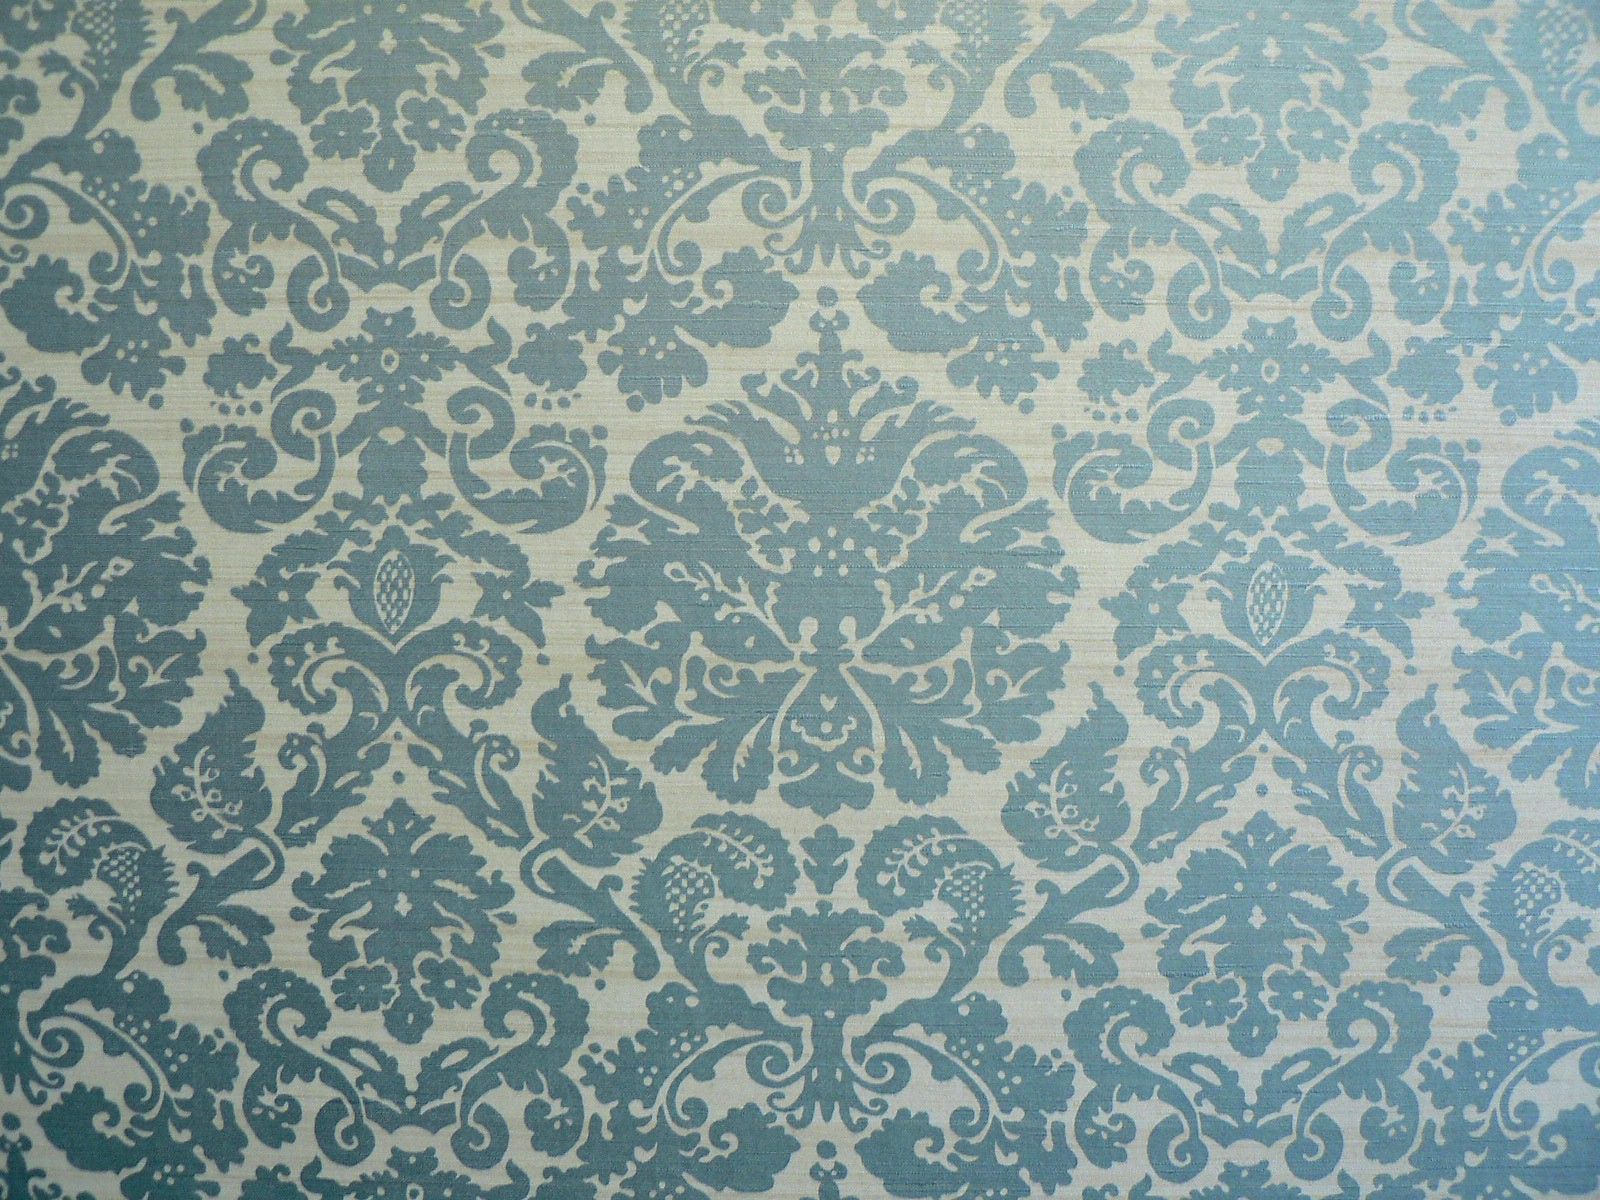 Hd Vintage Wallpapers - Blue Interior Wallpaper Texture ...